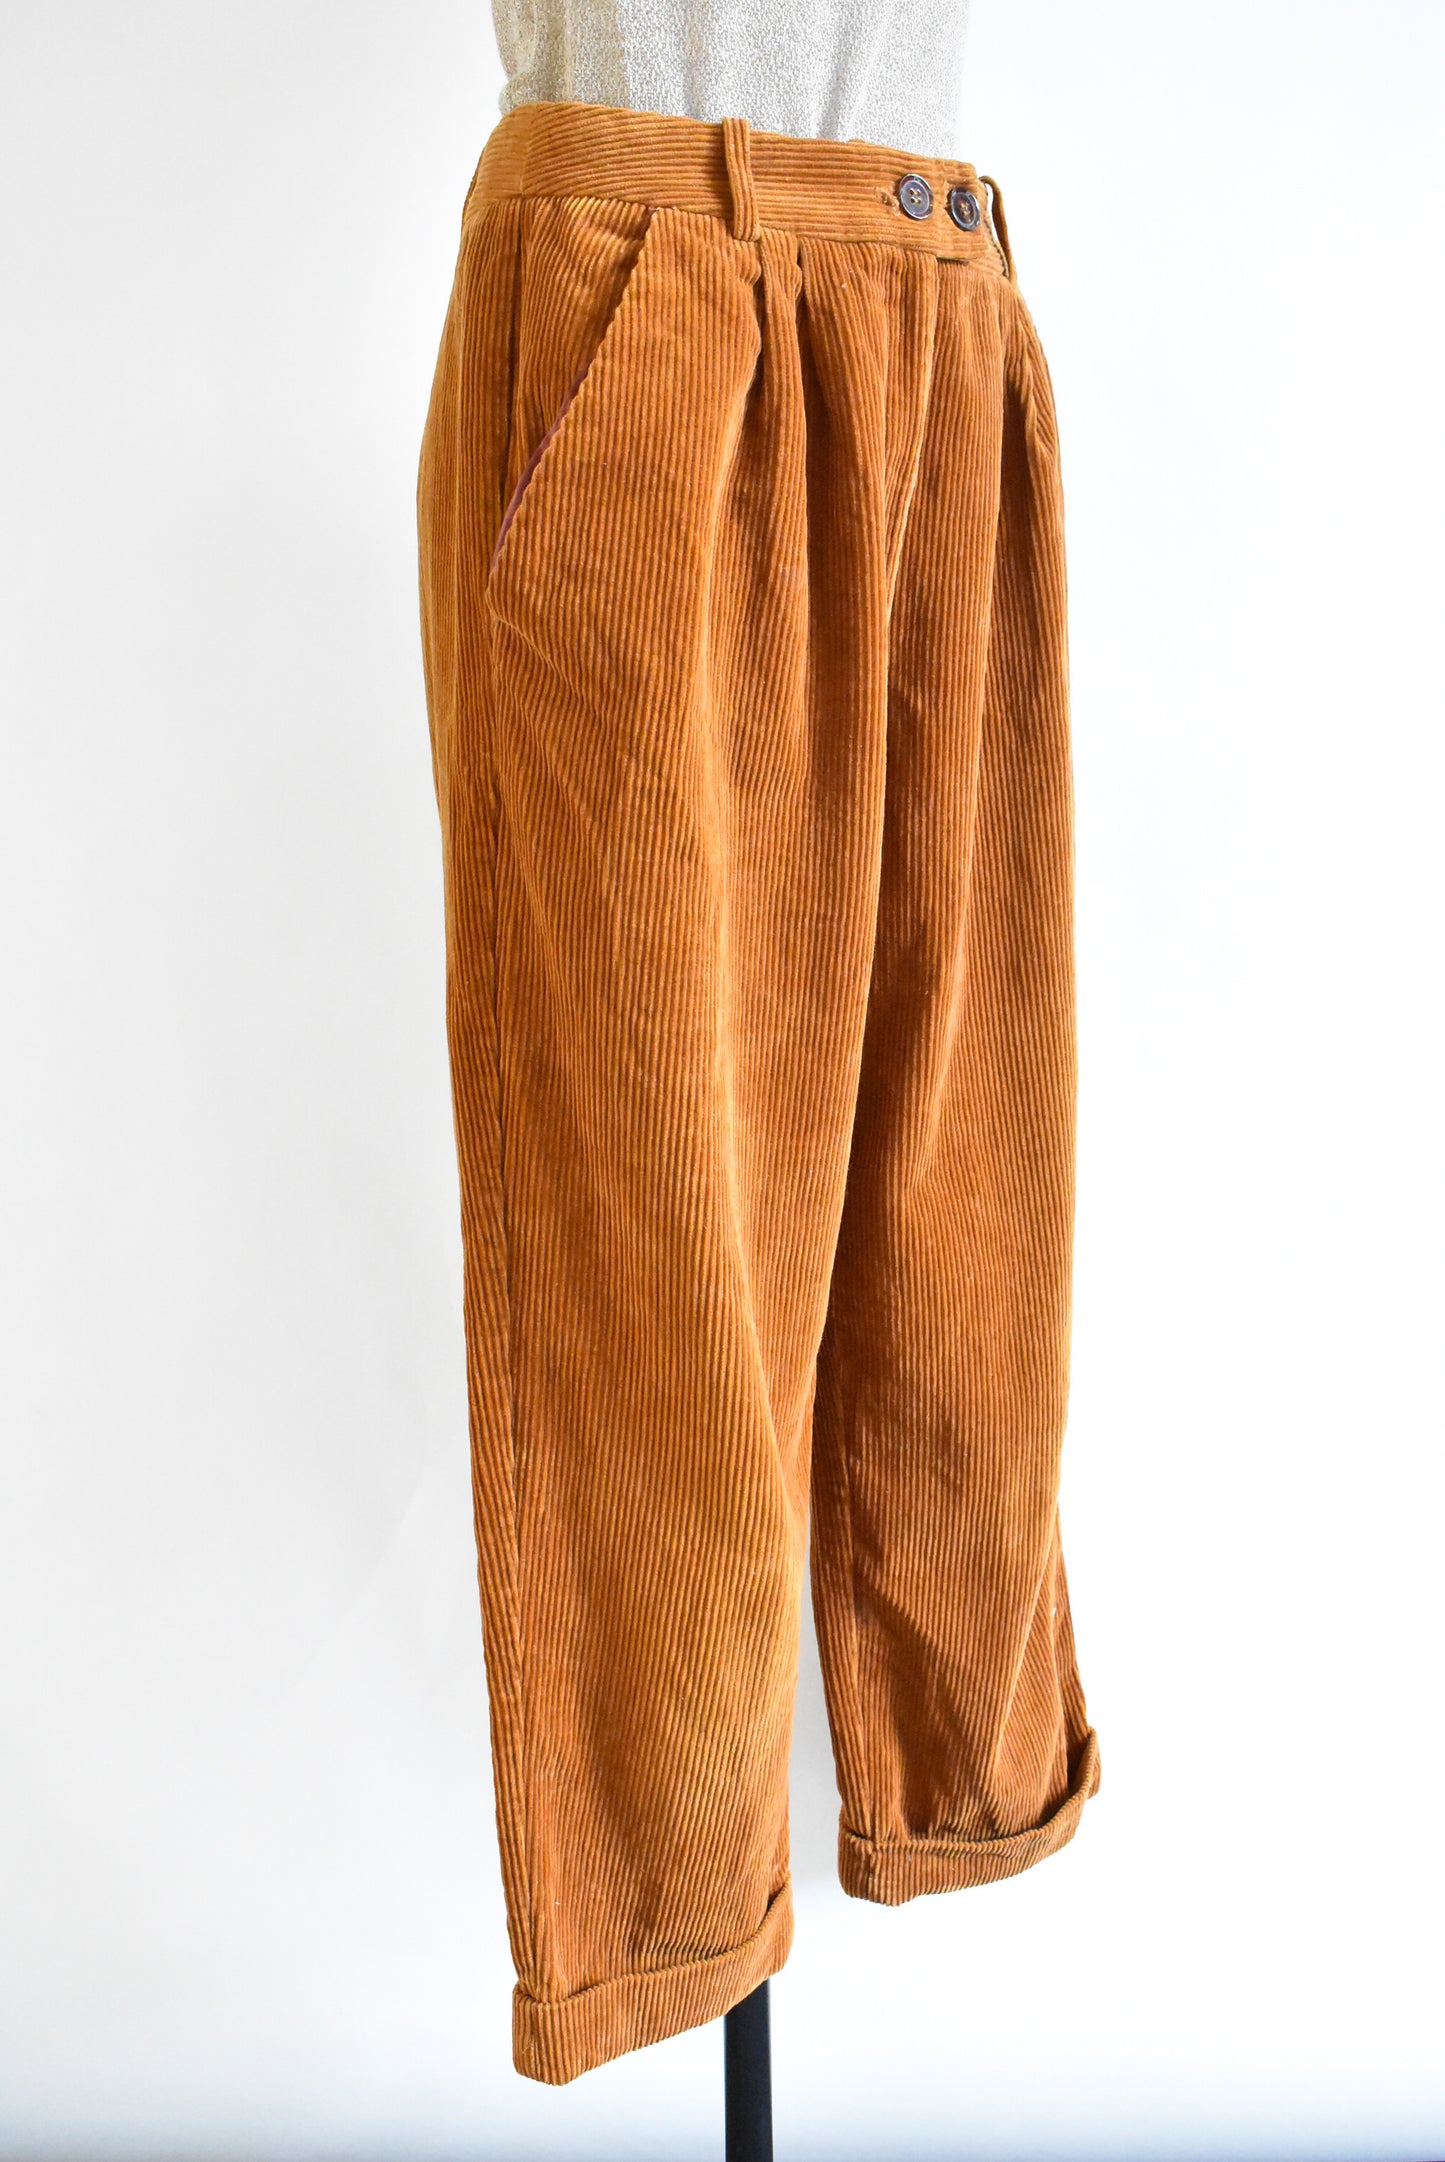 Vera Ravenna ginger corduroy pants, size 10